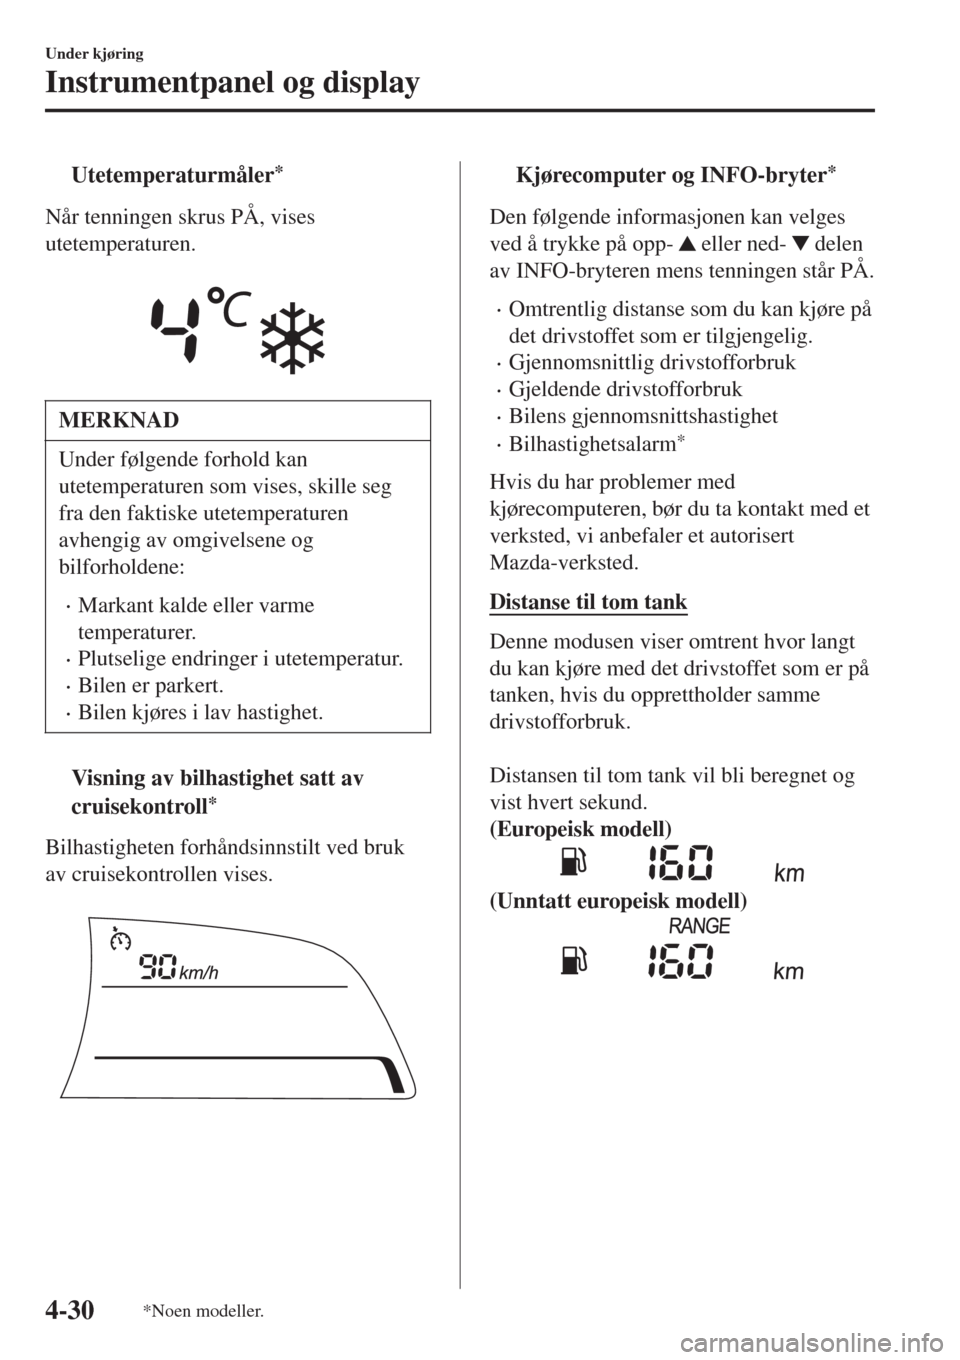 MAZDA MODEL CX-3 2015  Brukerhåndbok (in Norwegian) tUtetemperaturmåler*
Når tenningen skrus PÅ, vises
utetemperaturen.
 
MERKNAD
Under følgende forhold kan
utetemperaturen som vises, skille seg
fra den faktiske utetemperaturen
avhengig av omgivels